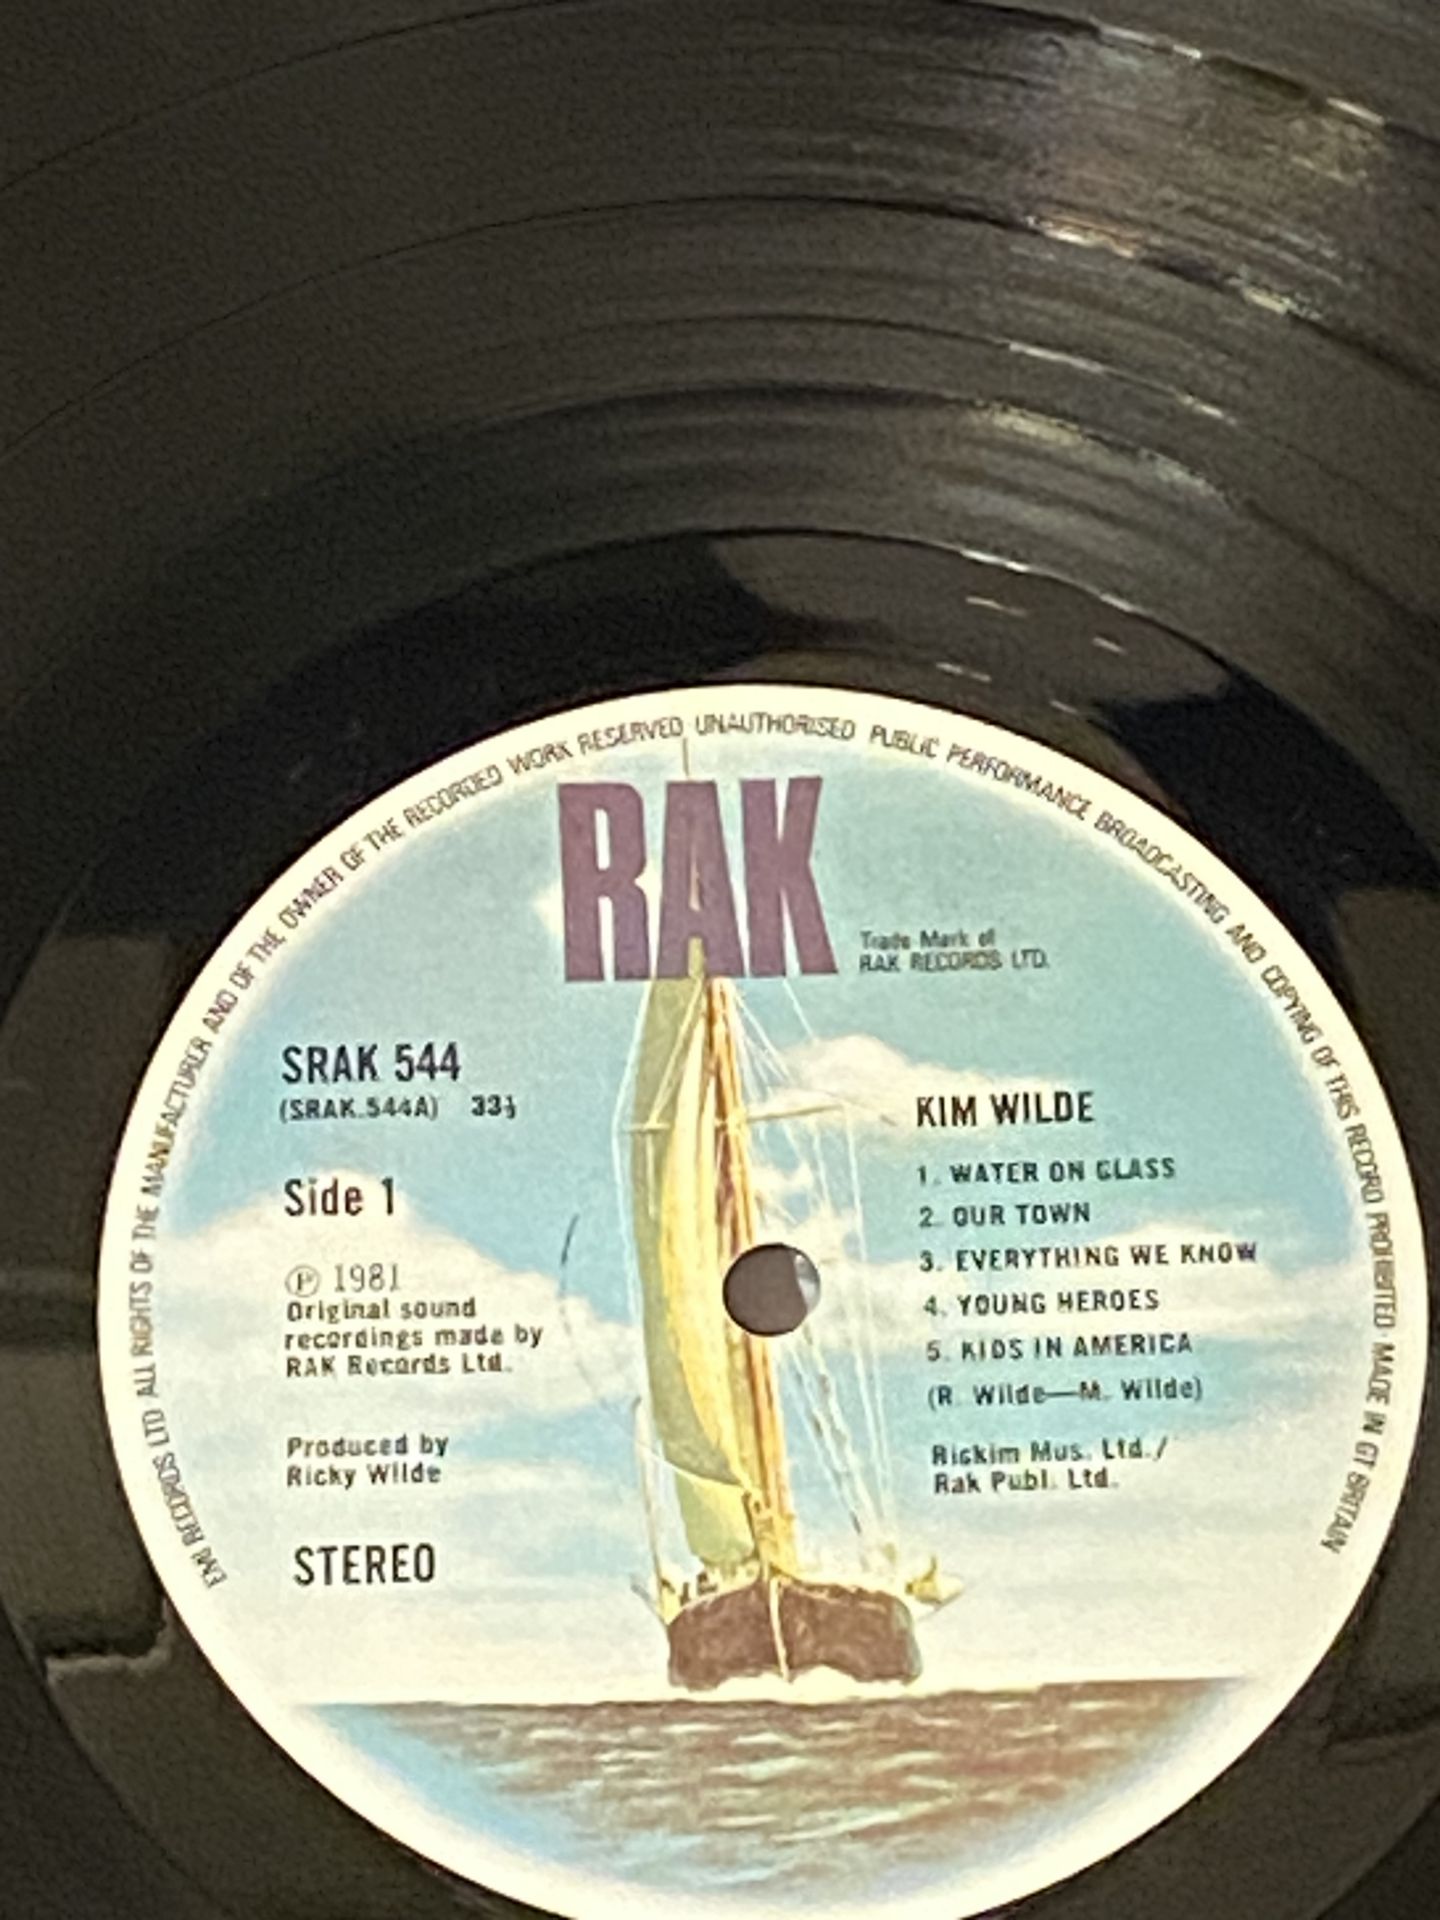 Kim Wilde Signed LP - Alan Partridge LP - The Firm LP. - Image 4 of 20